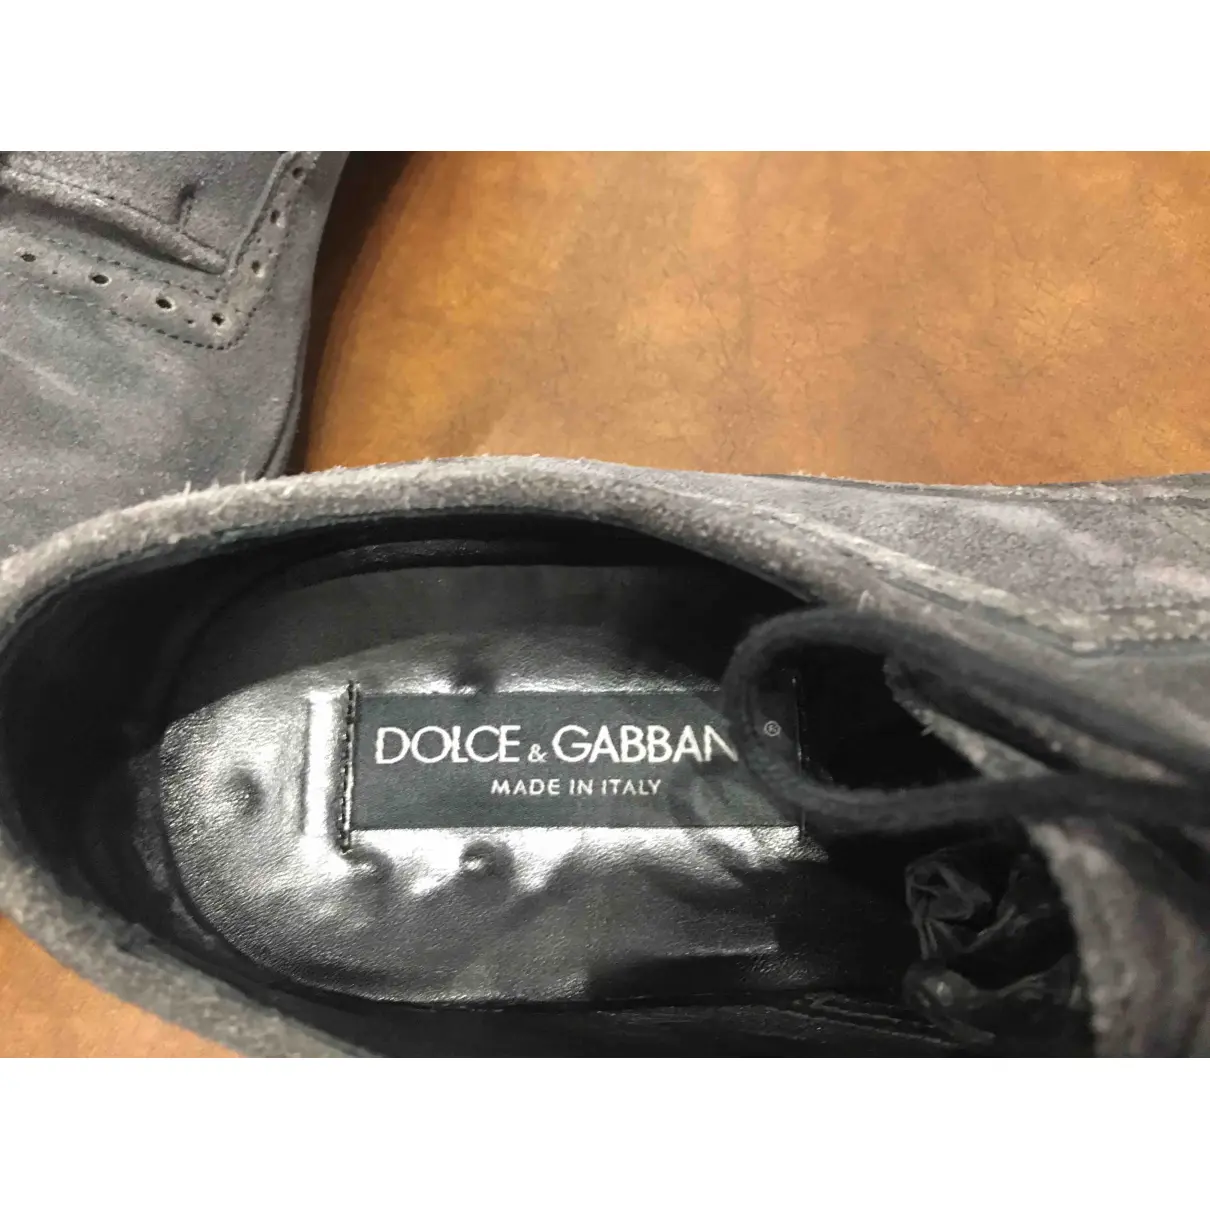 Luxury Dolce & Gabbana Lace ups Men